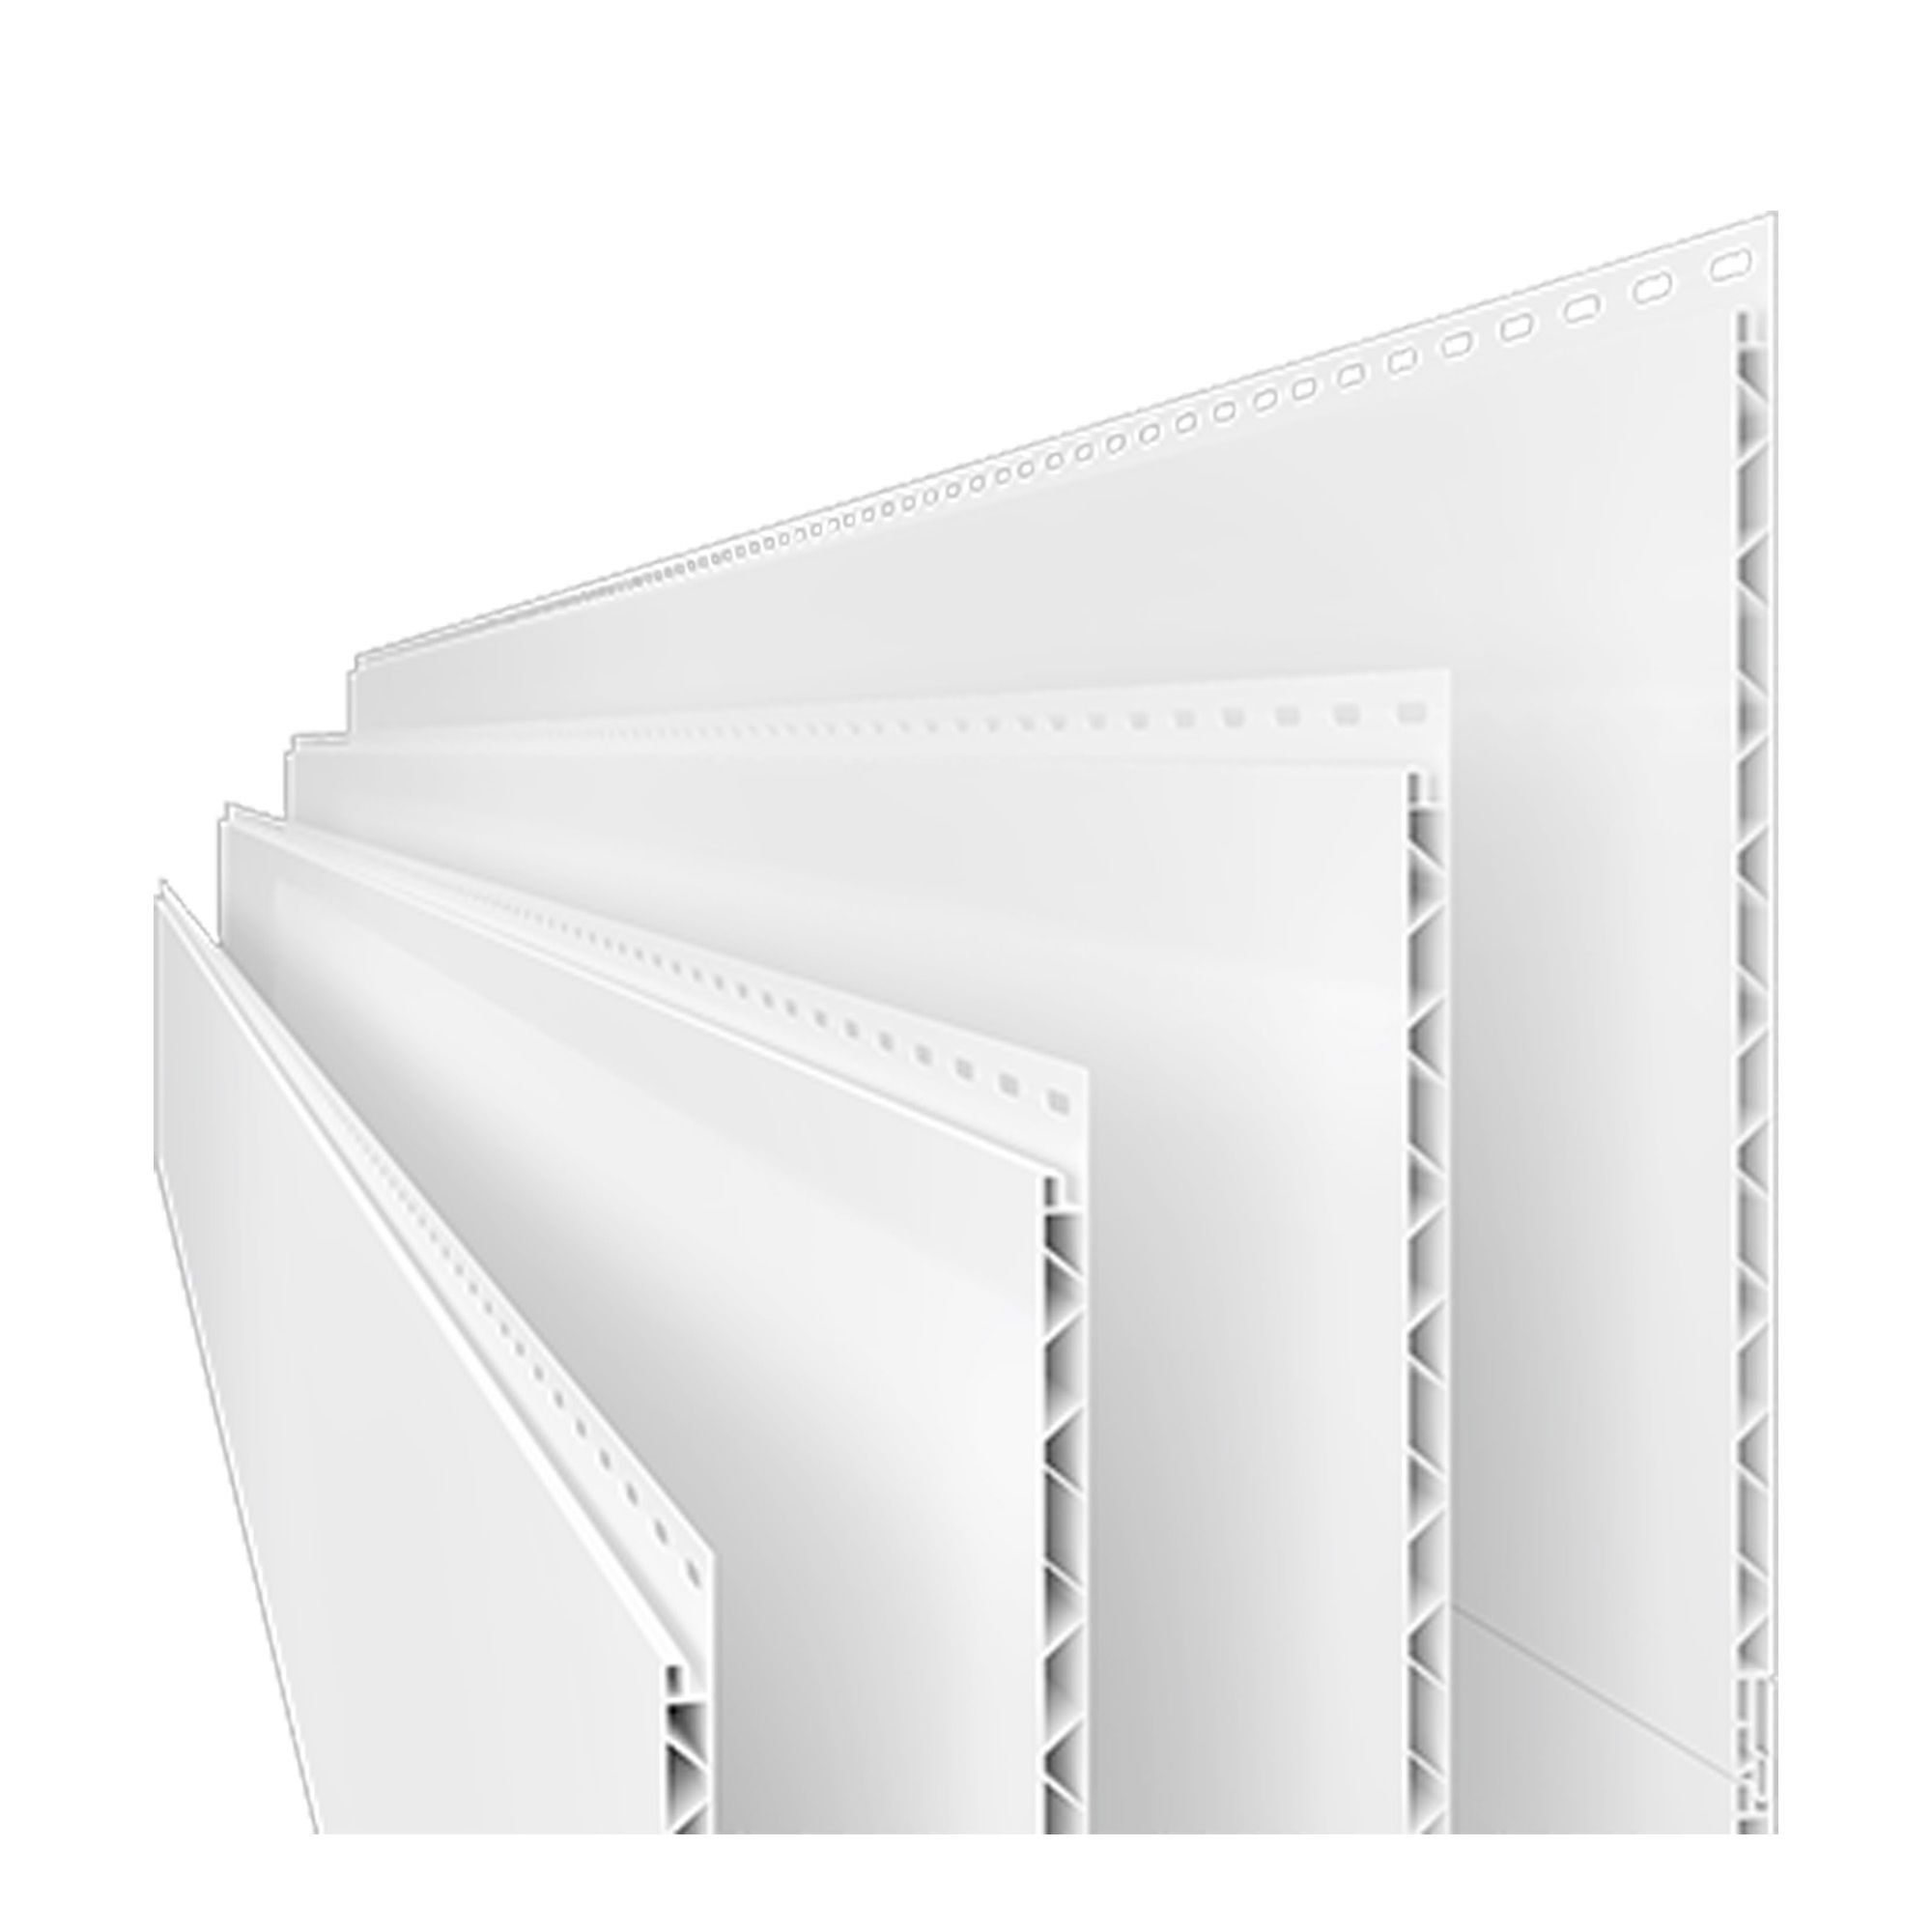 Panneau En PVC Trusscore Wall CeilingBoard Blanc X X De TRUSSCORE BMR